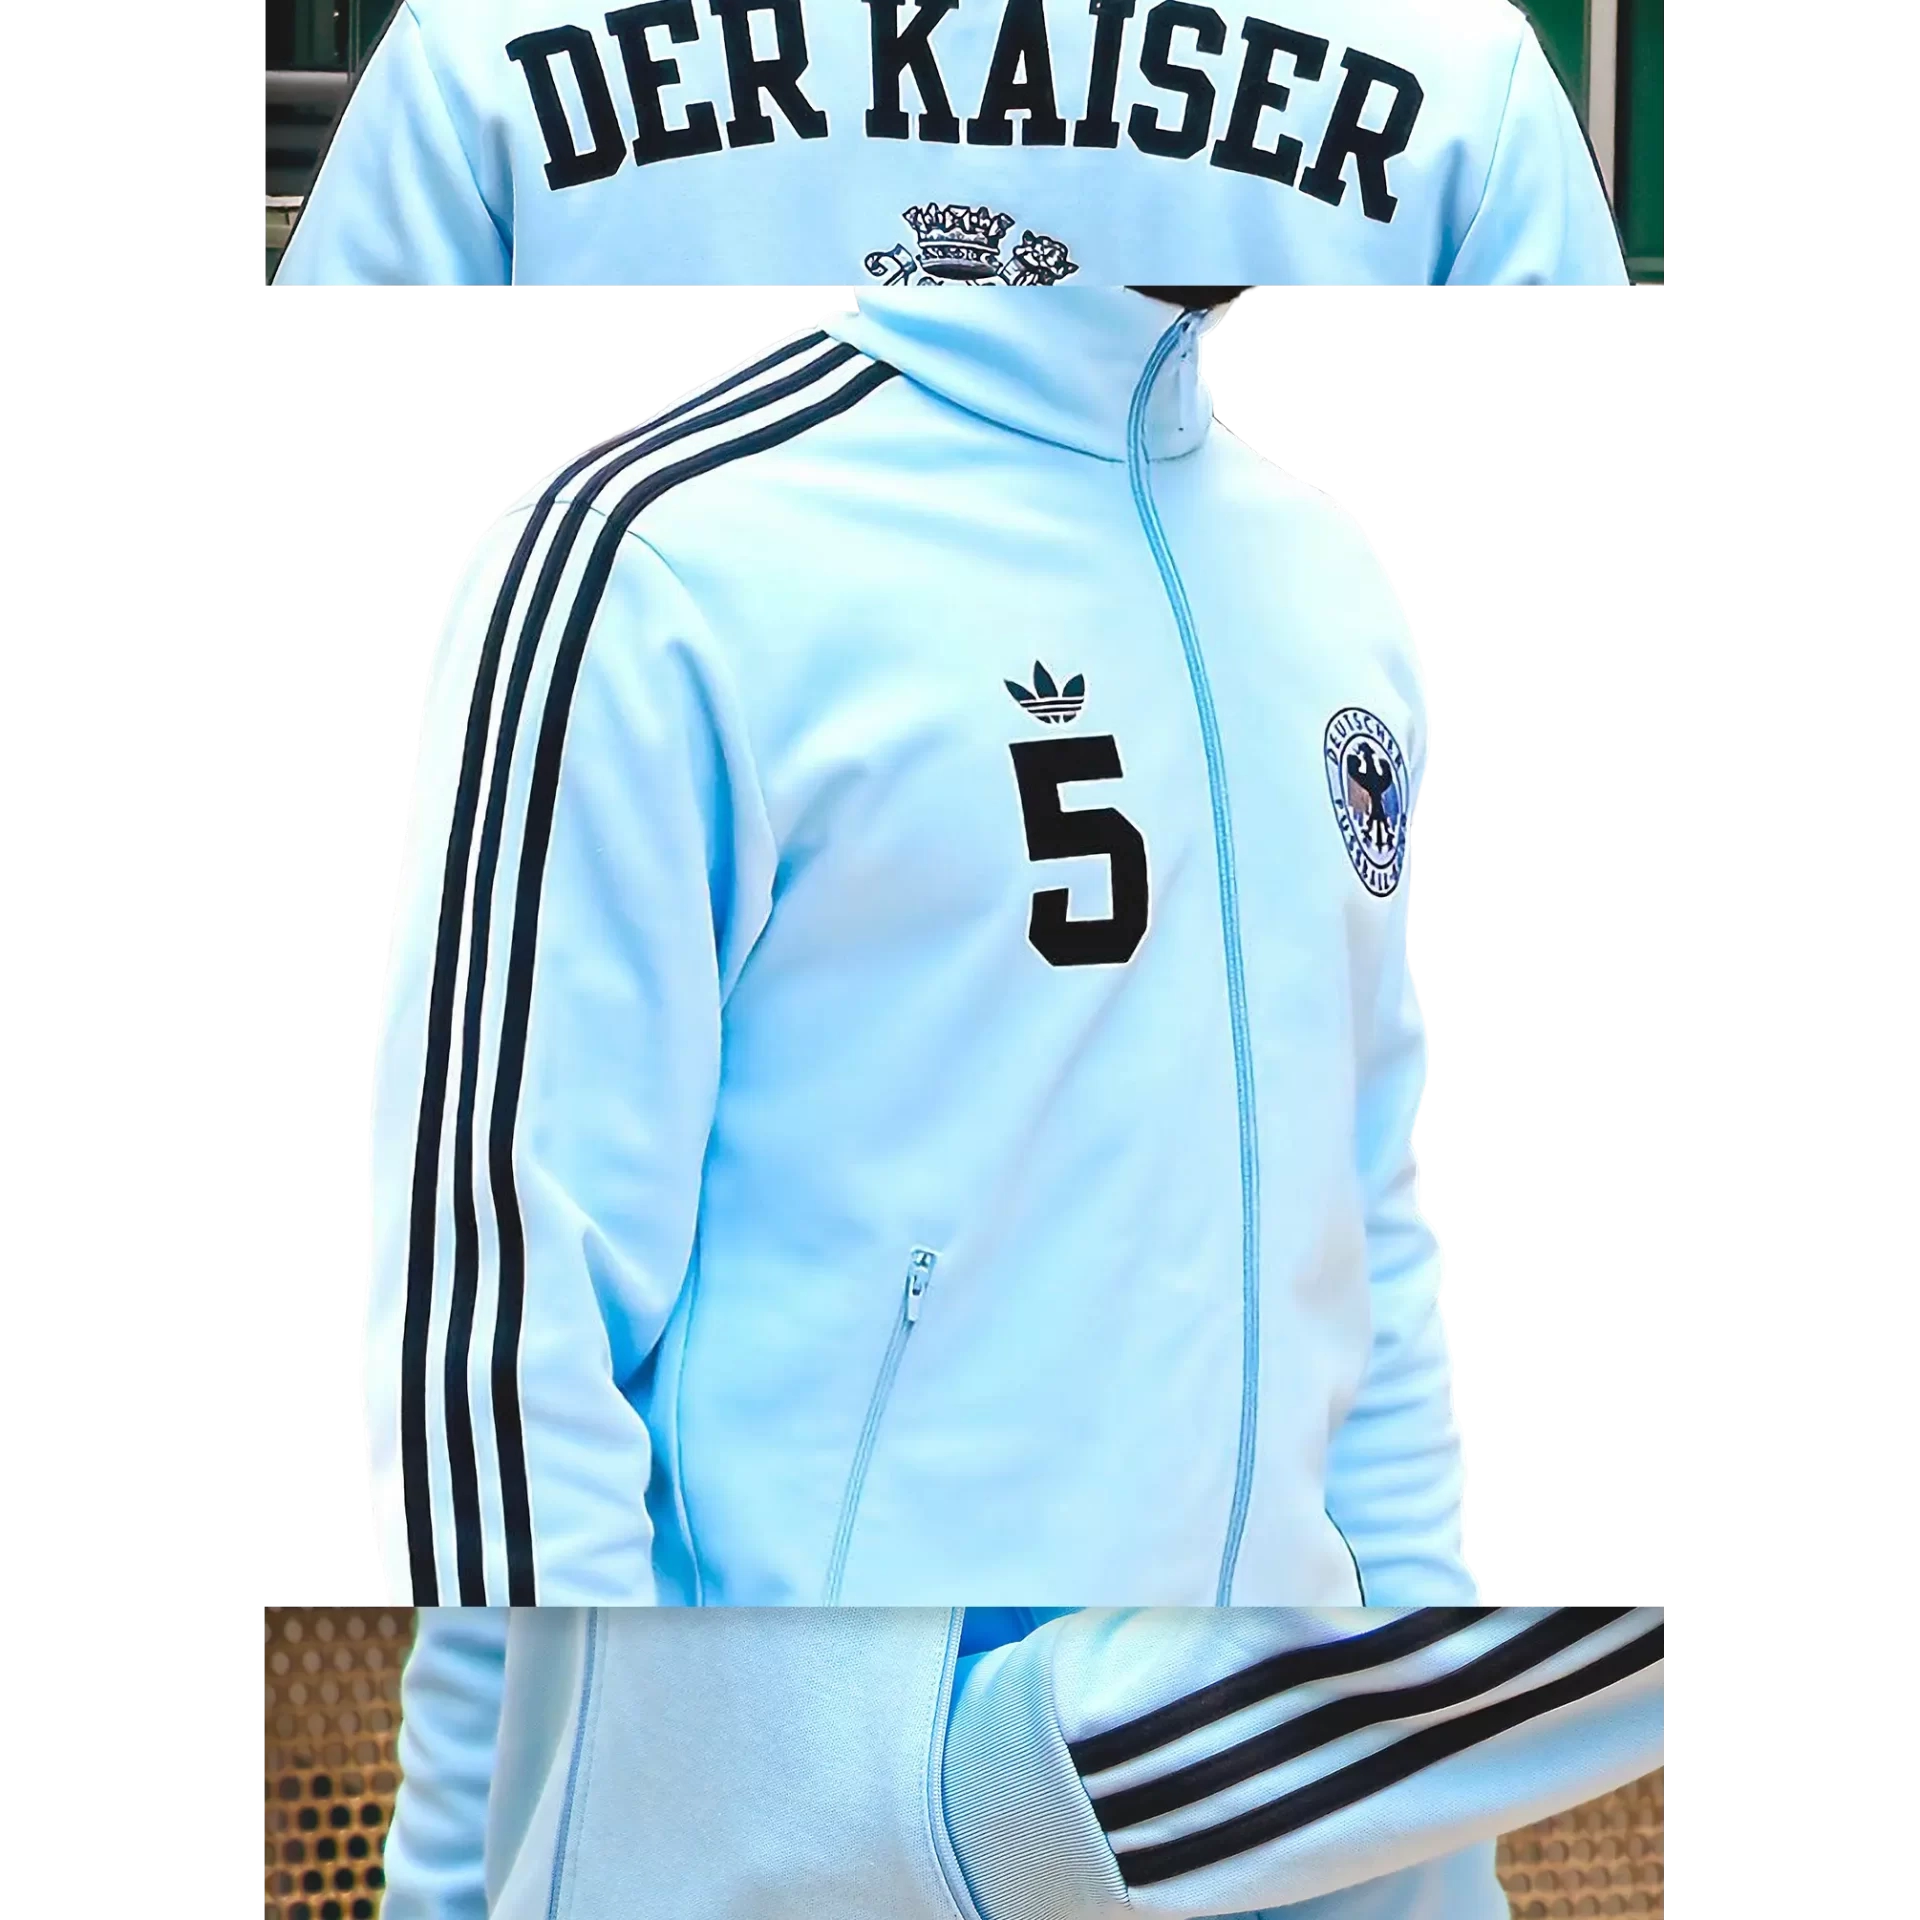 Men's 2005 Der Kaiser '74 Track Top by Adidas Originals: Gorgeous (EnLawded.com file #lmchk40150ip2y121349kg9st)